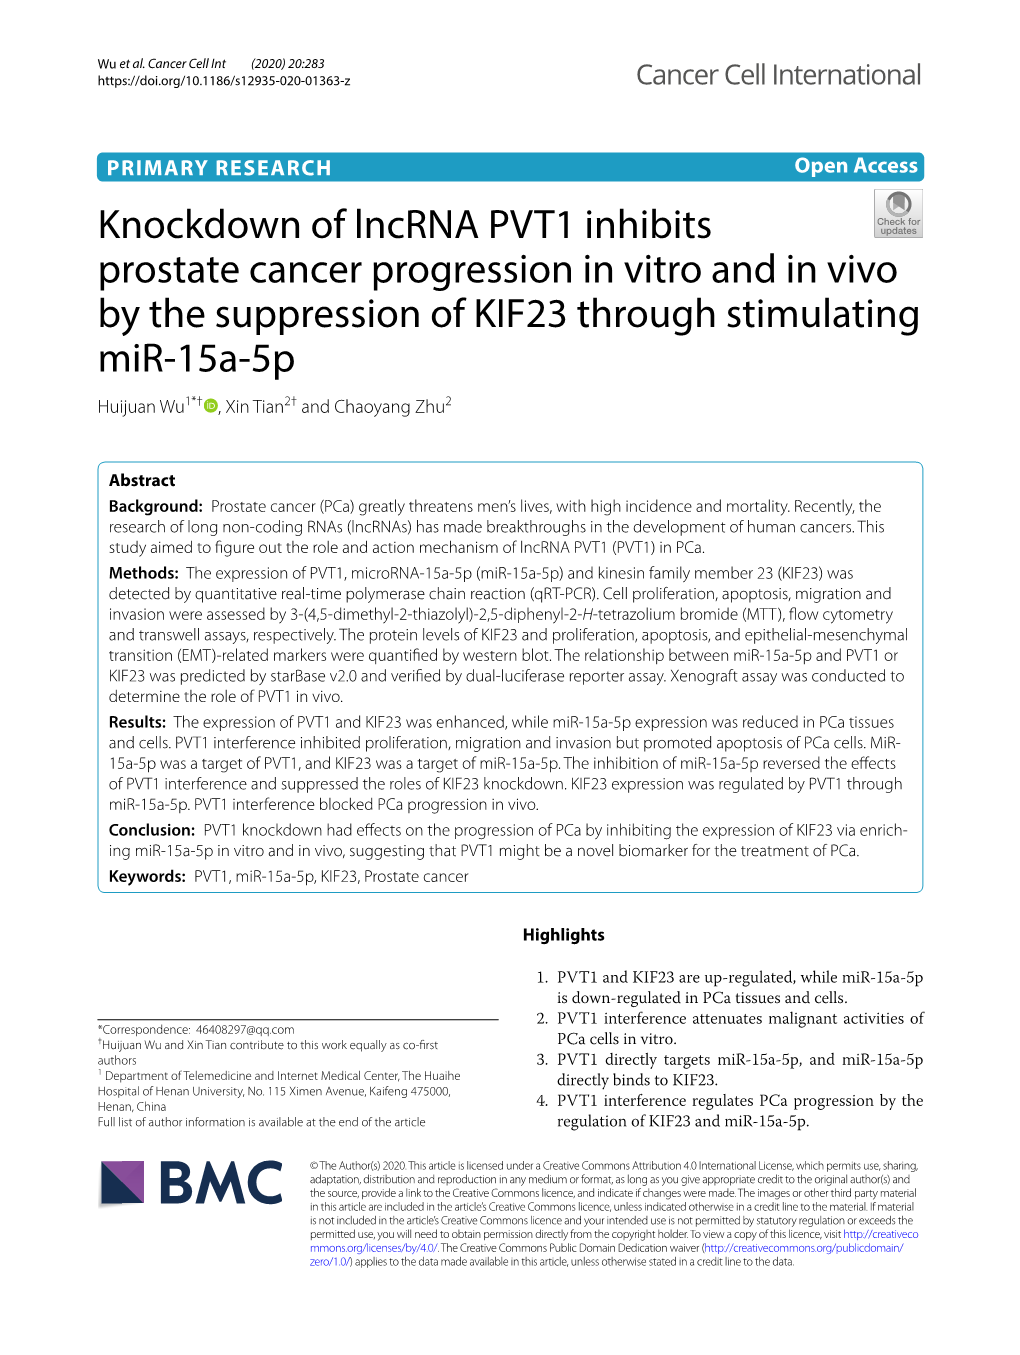 Knockdown of Lncrna PVT1 Inhibits Prostate Cancer Progression in Vitro